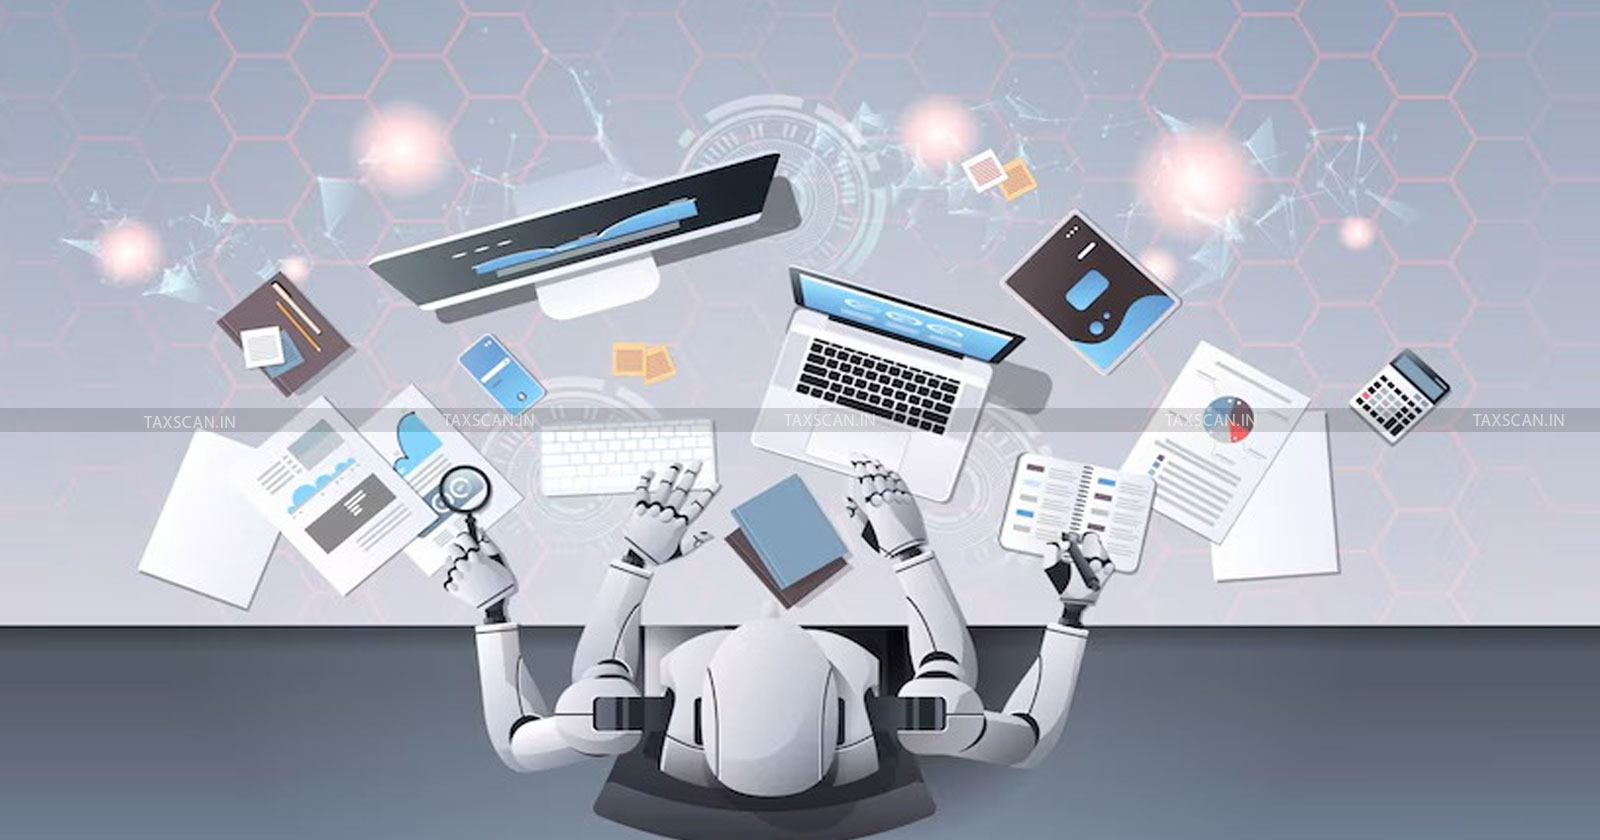 AI - Artificial Intelligence - AI in tax compliance - Recent AI trends in taxation - Future of AI in tax - Taxscan